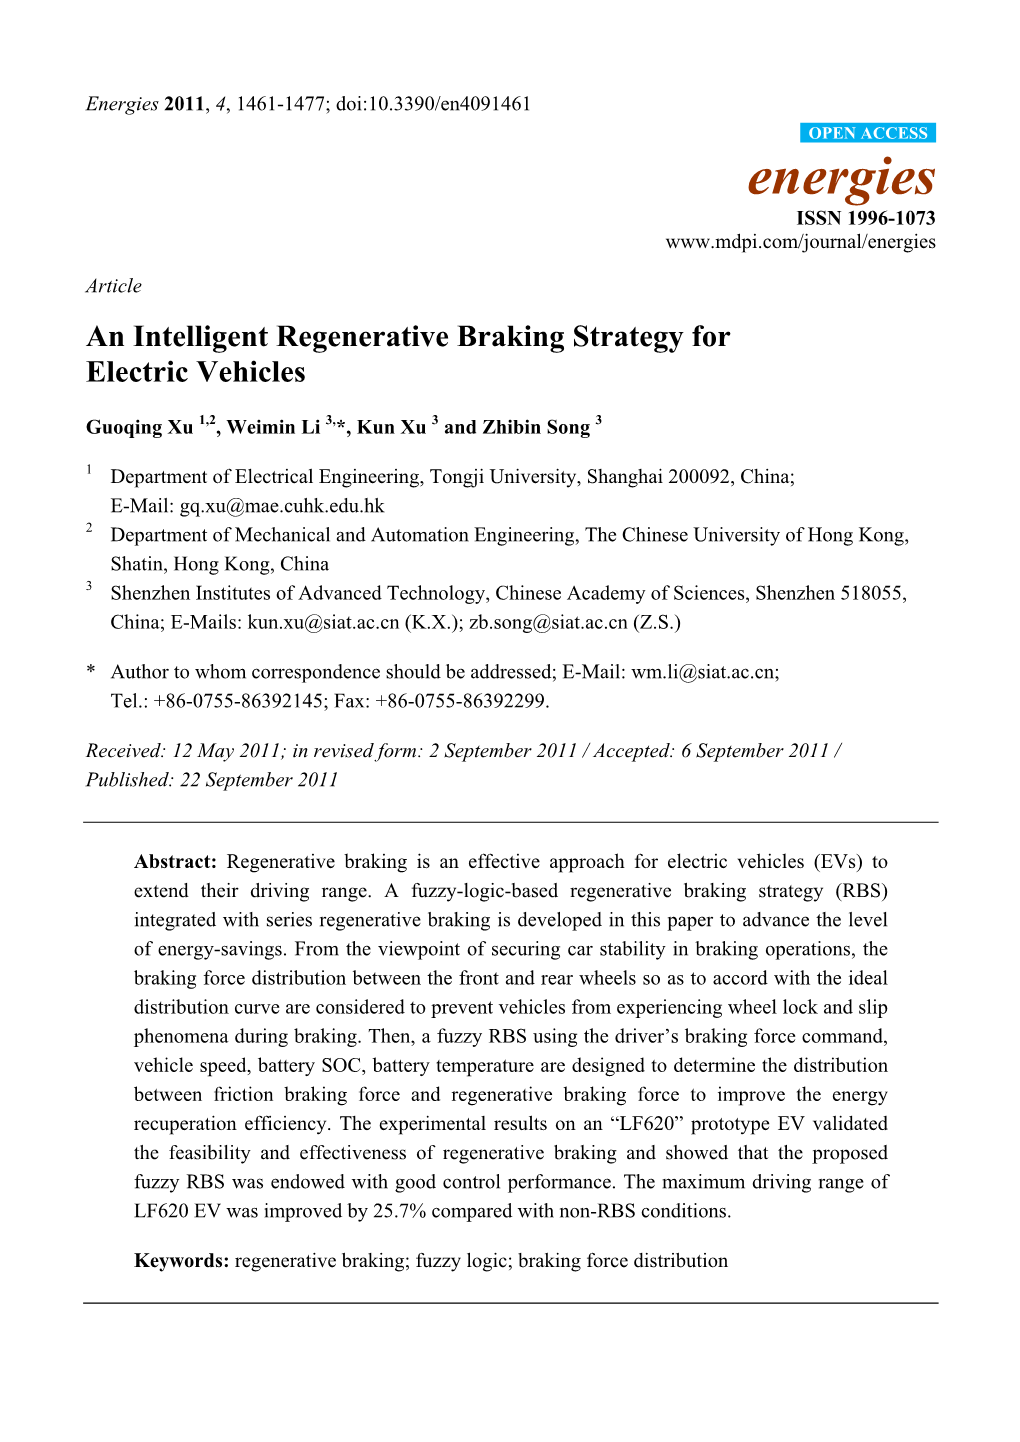 An Intelligent Regenerative Braking Strategy for Electric Vehicles